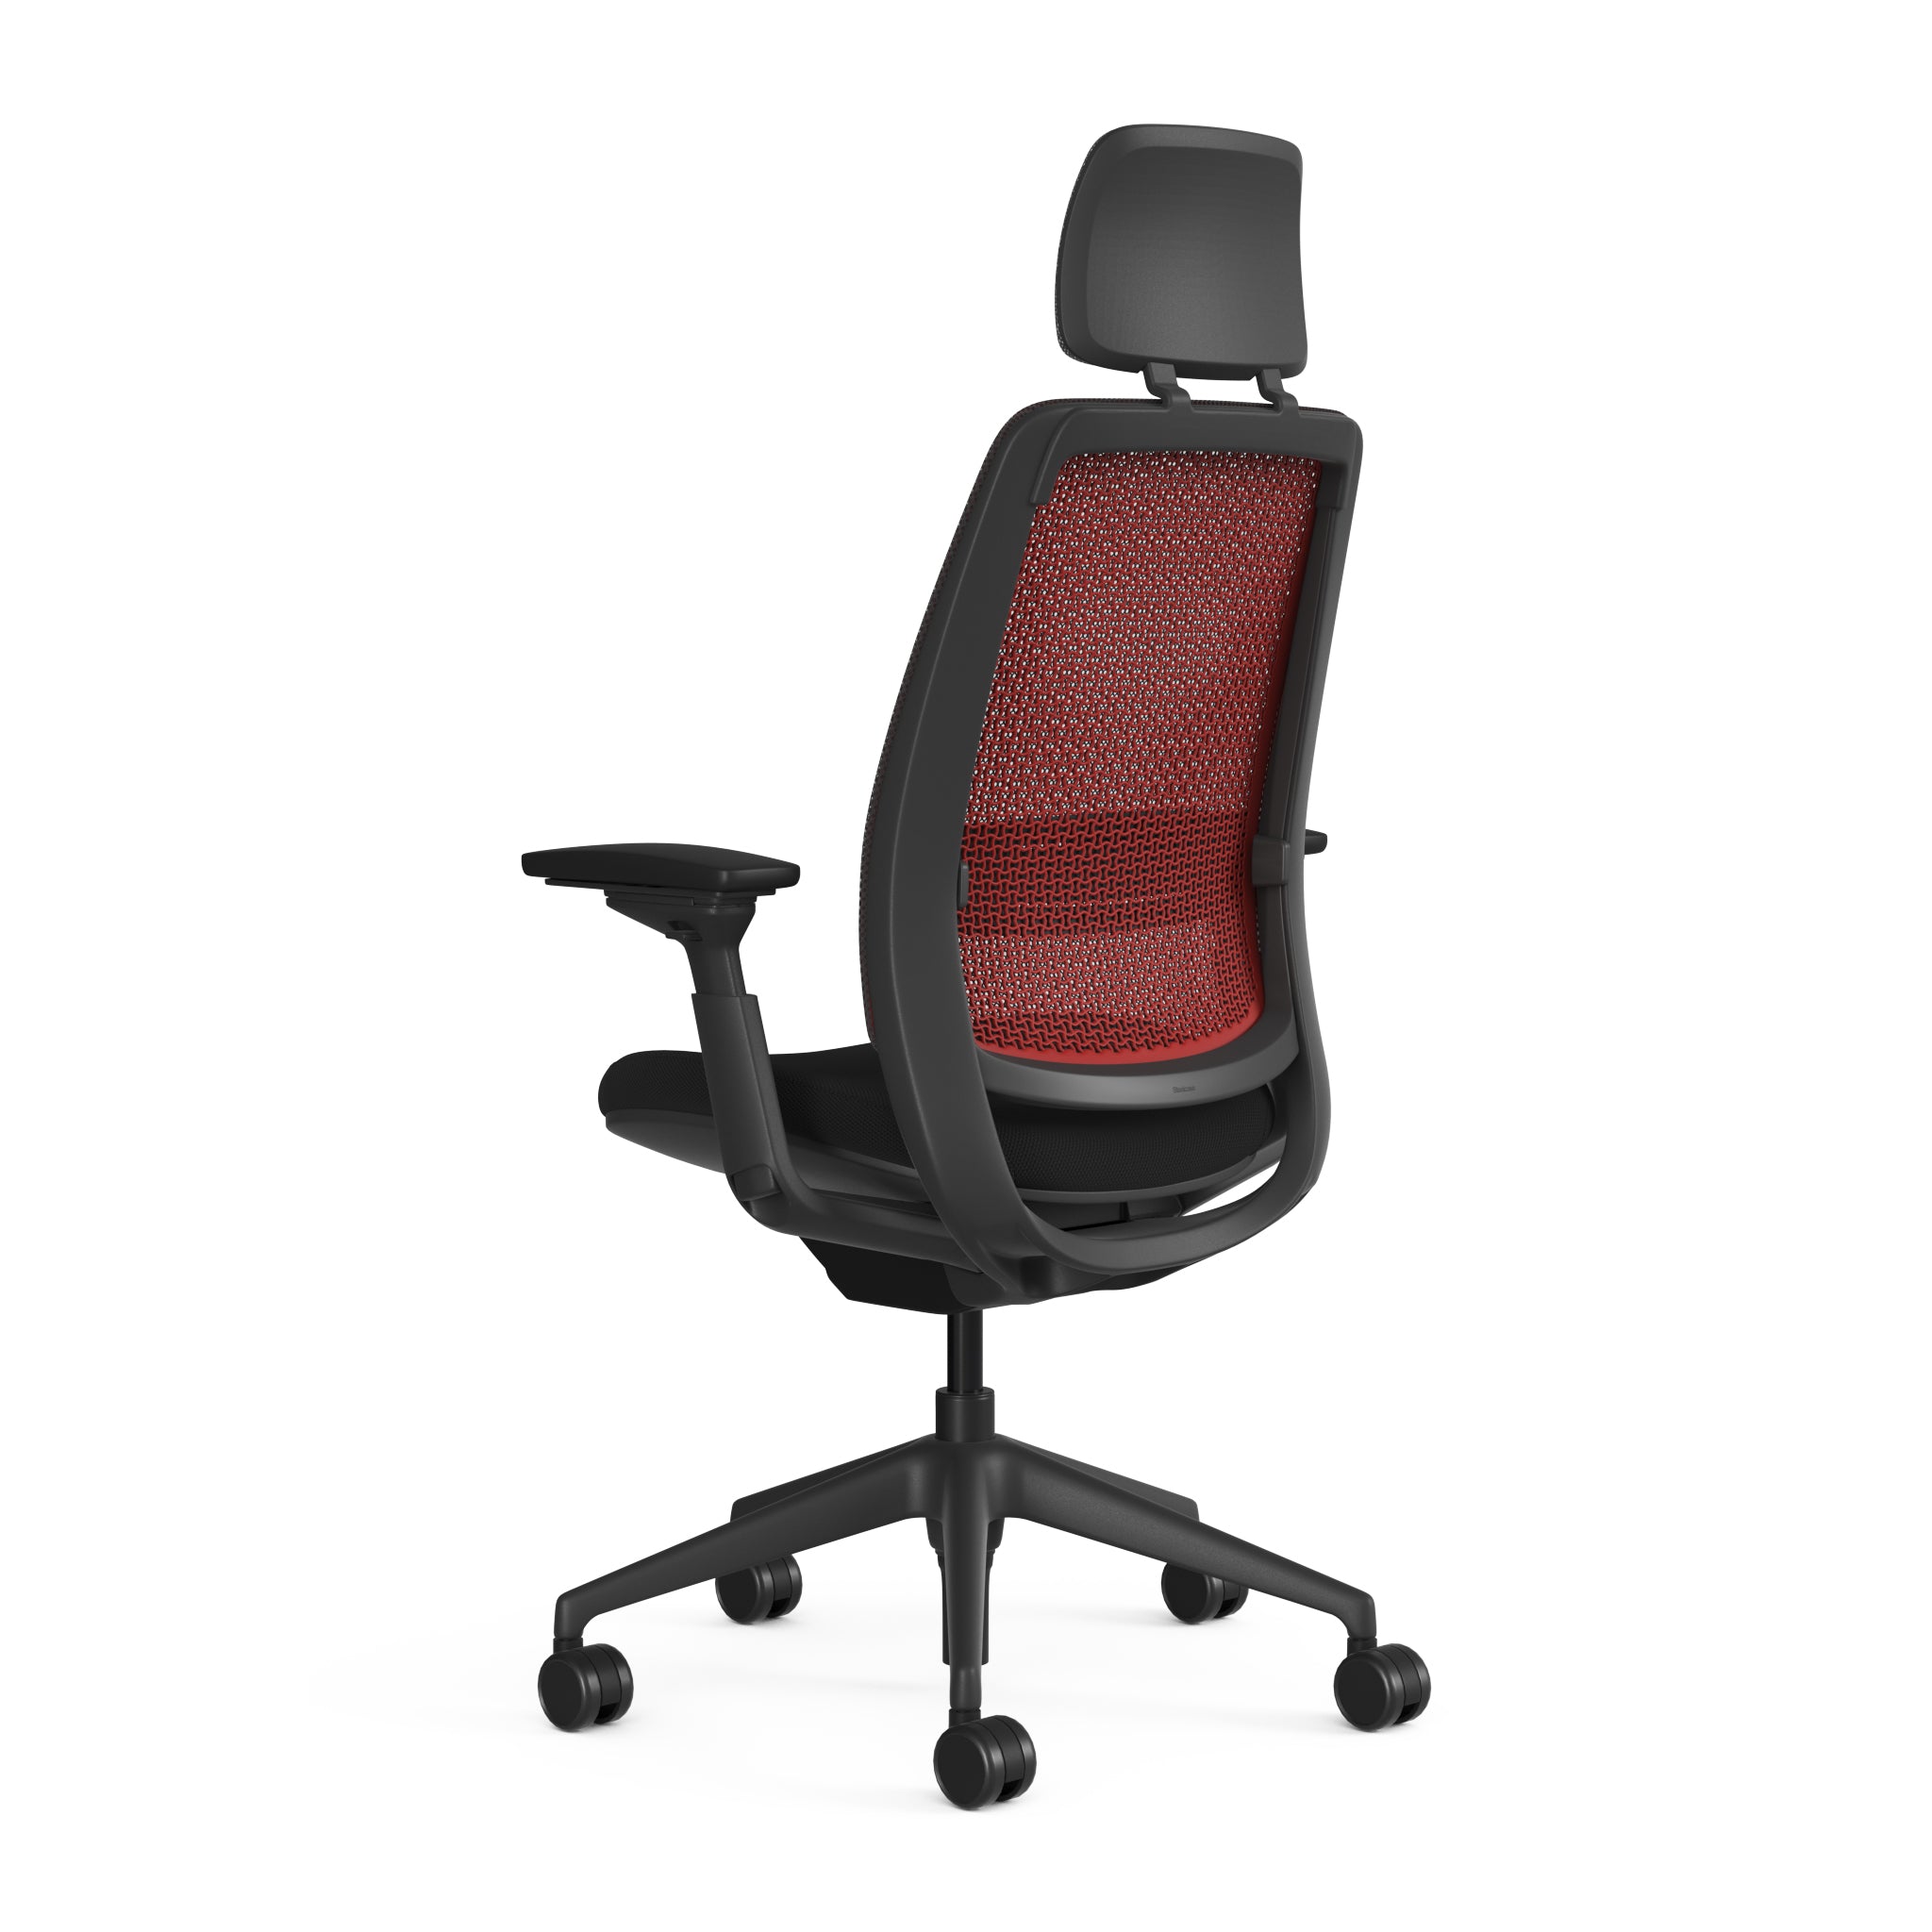 3D Microknit Scarlet; Adjustable Lumbar; Seat Cogent Connect Licorice; Frame Black